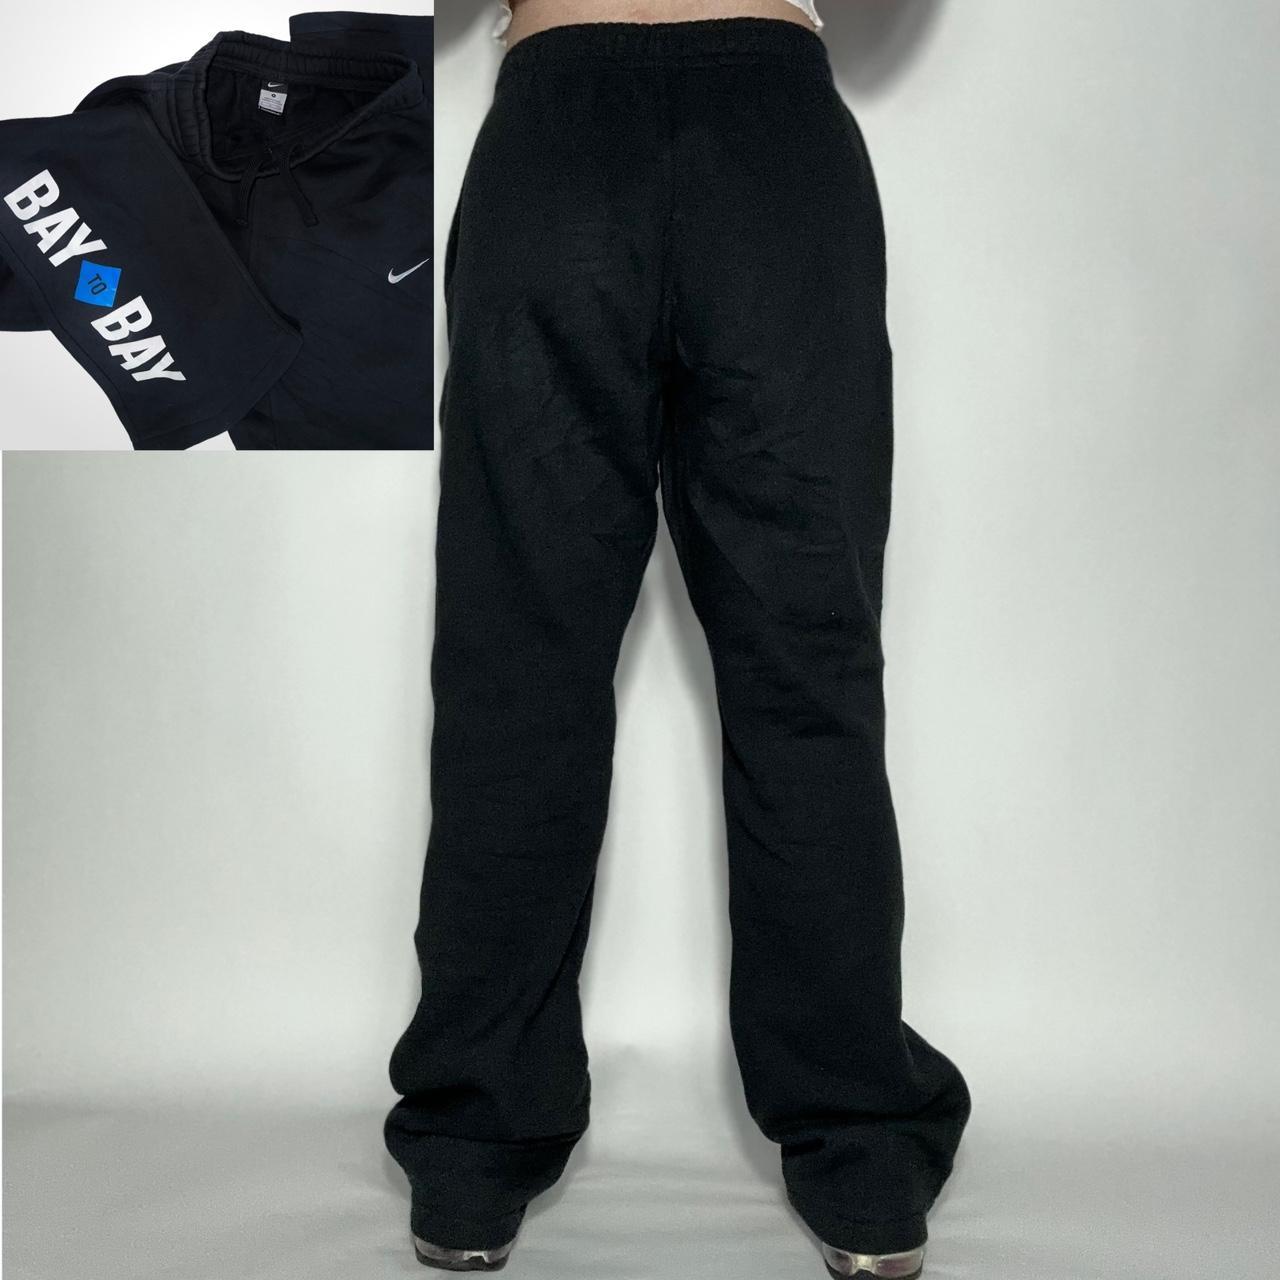 Nike Blue Cricket Track Pants, Size: S M L Xl Xxl Available